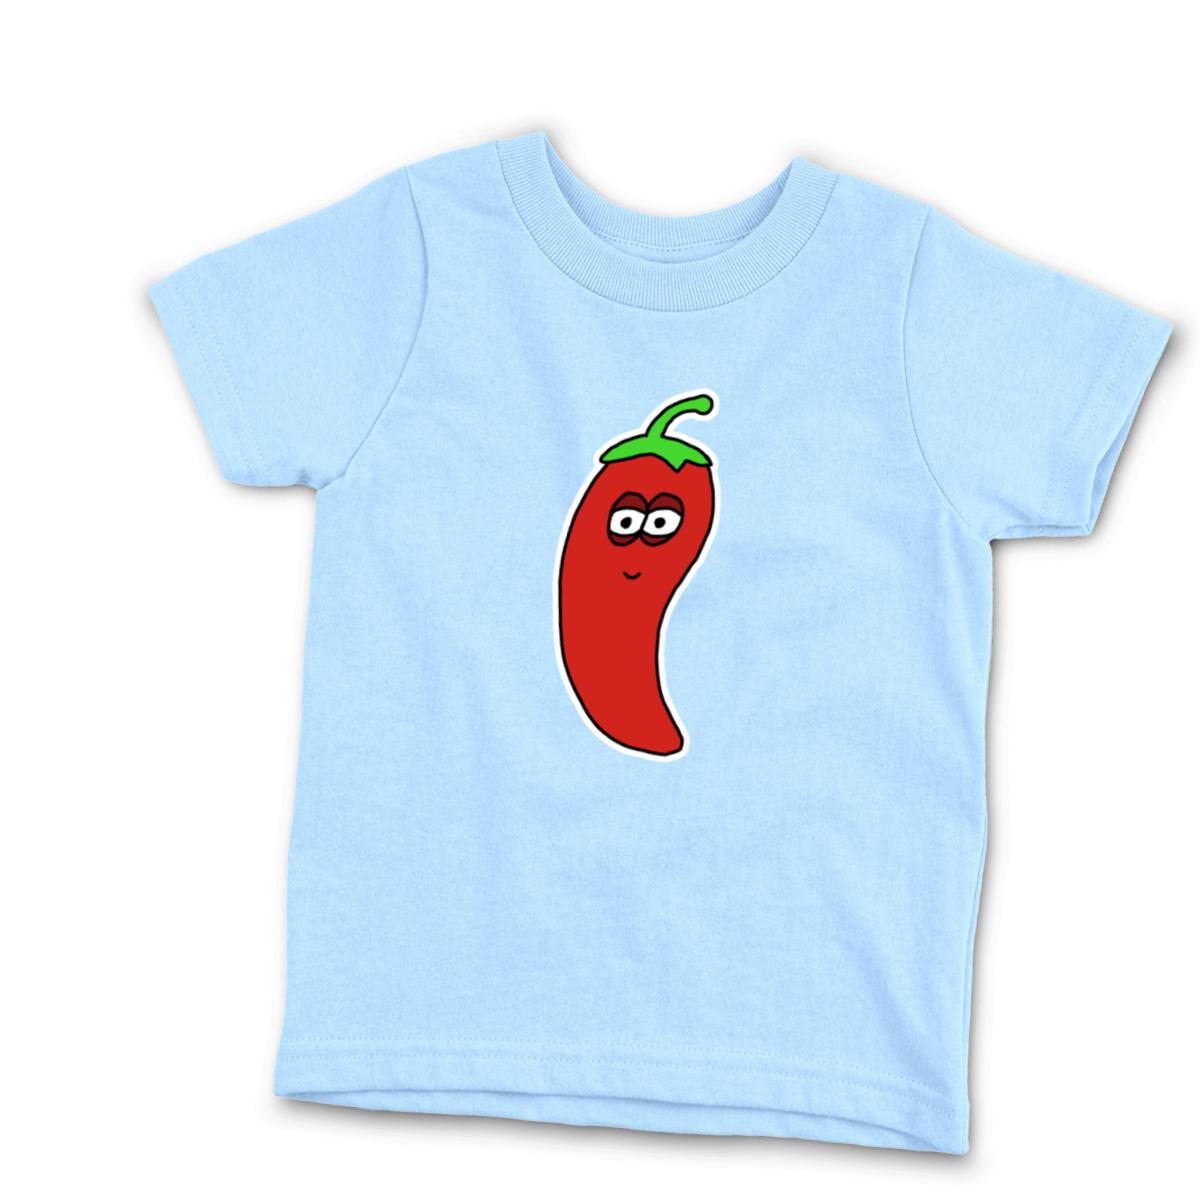 Chili Pepper Kid's Tee Small light-blue